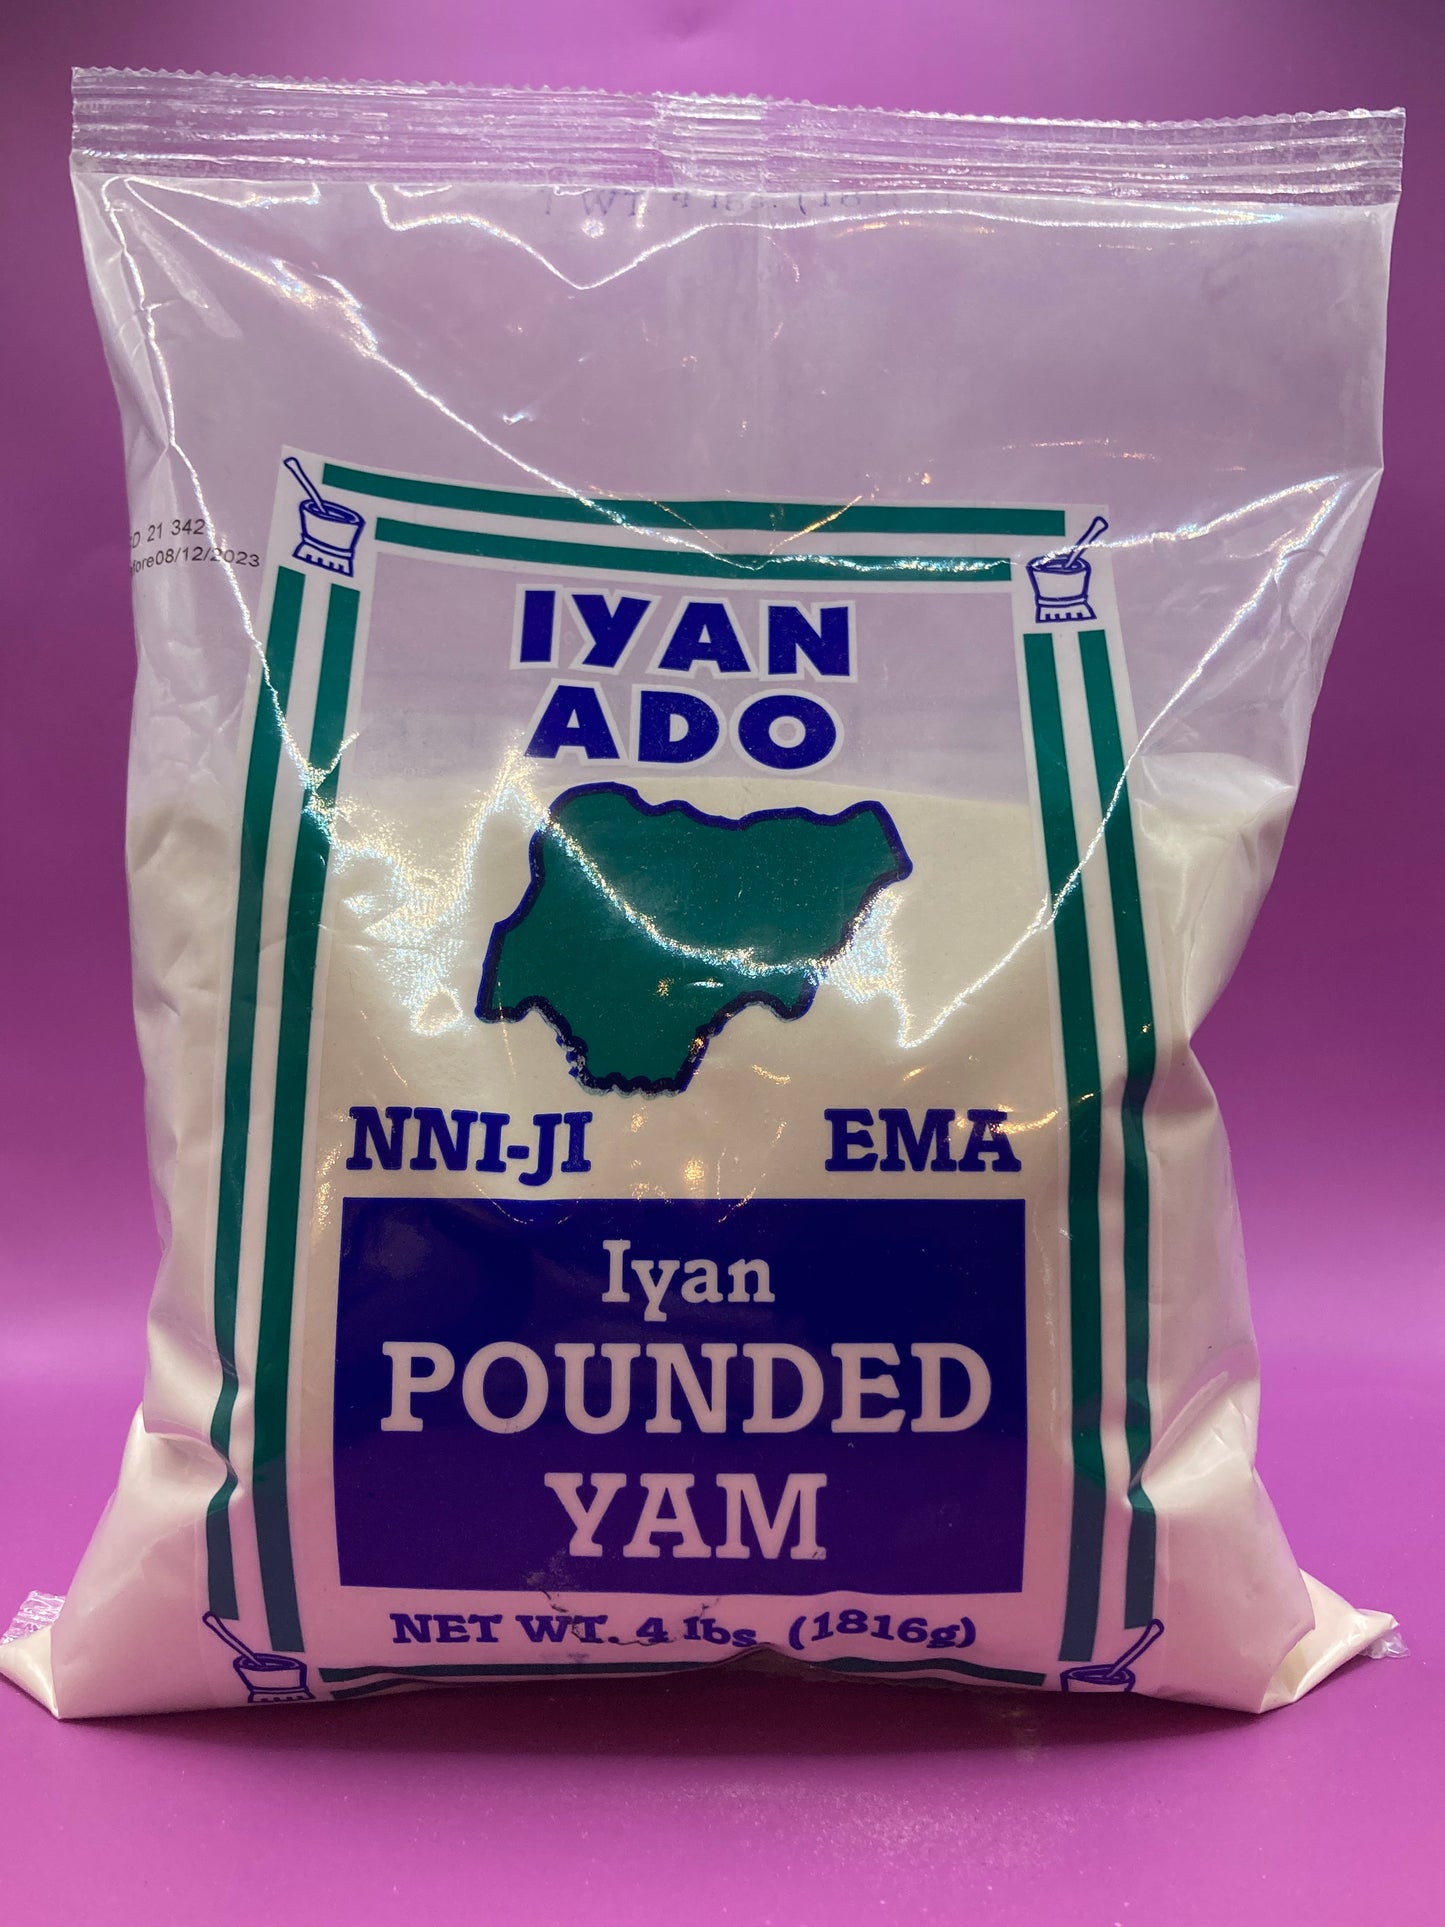 Iyan Ado Pounded Yam 4lb